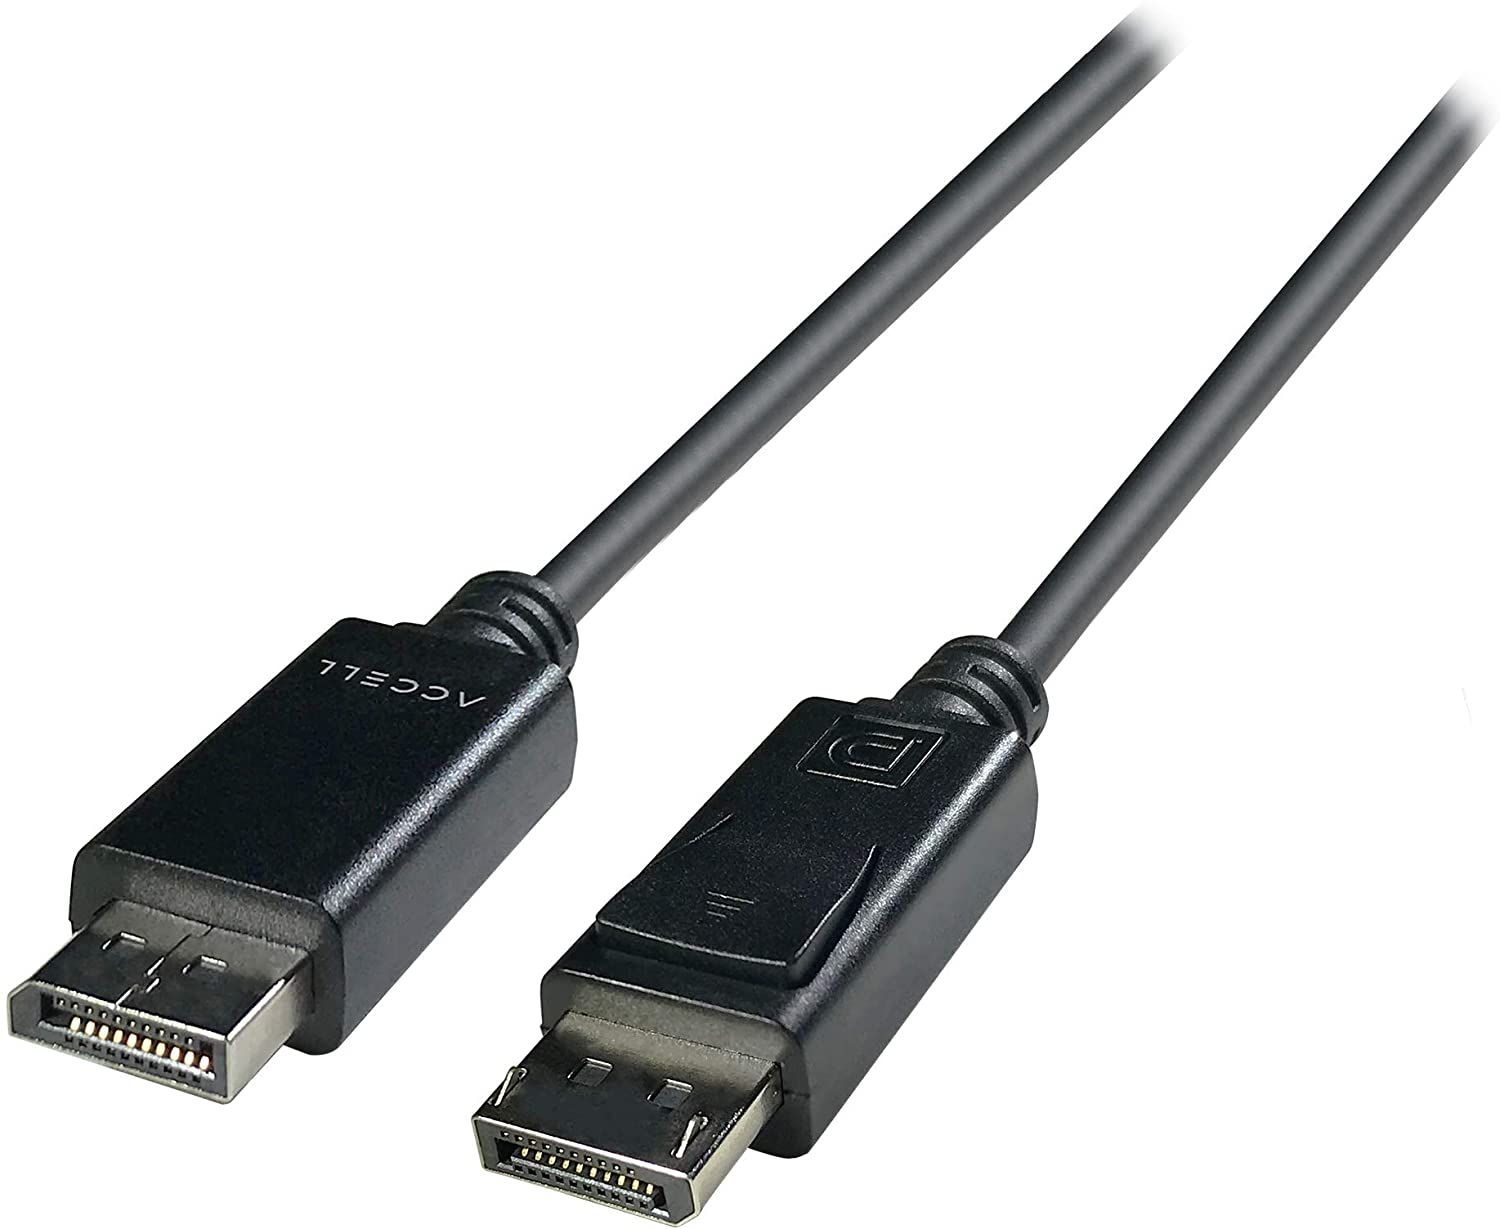   Basics DisplayPort 1.2 Cable, 21.6Gbps High